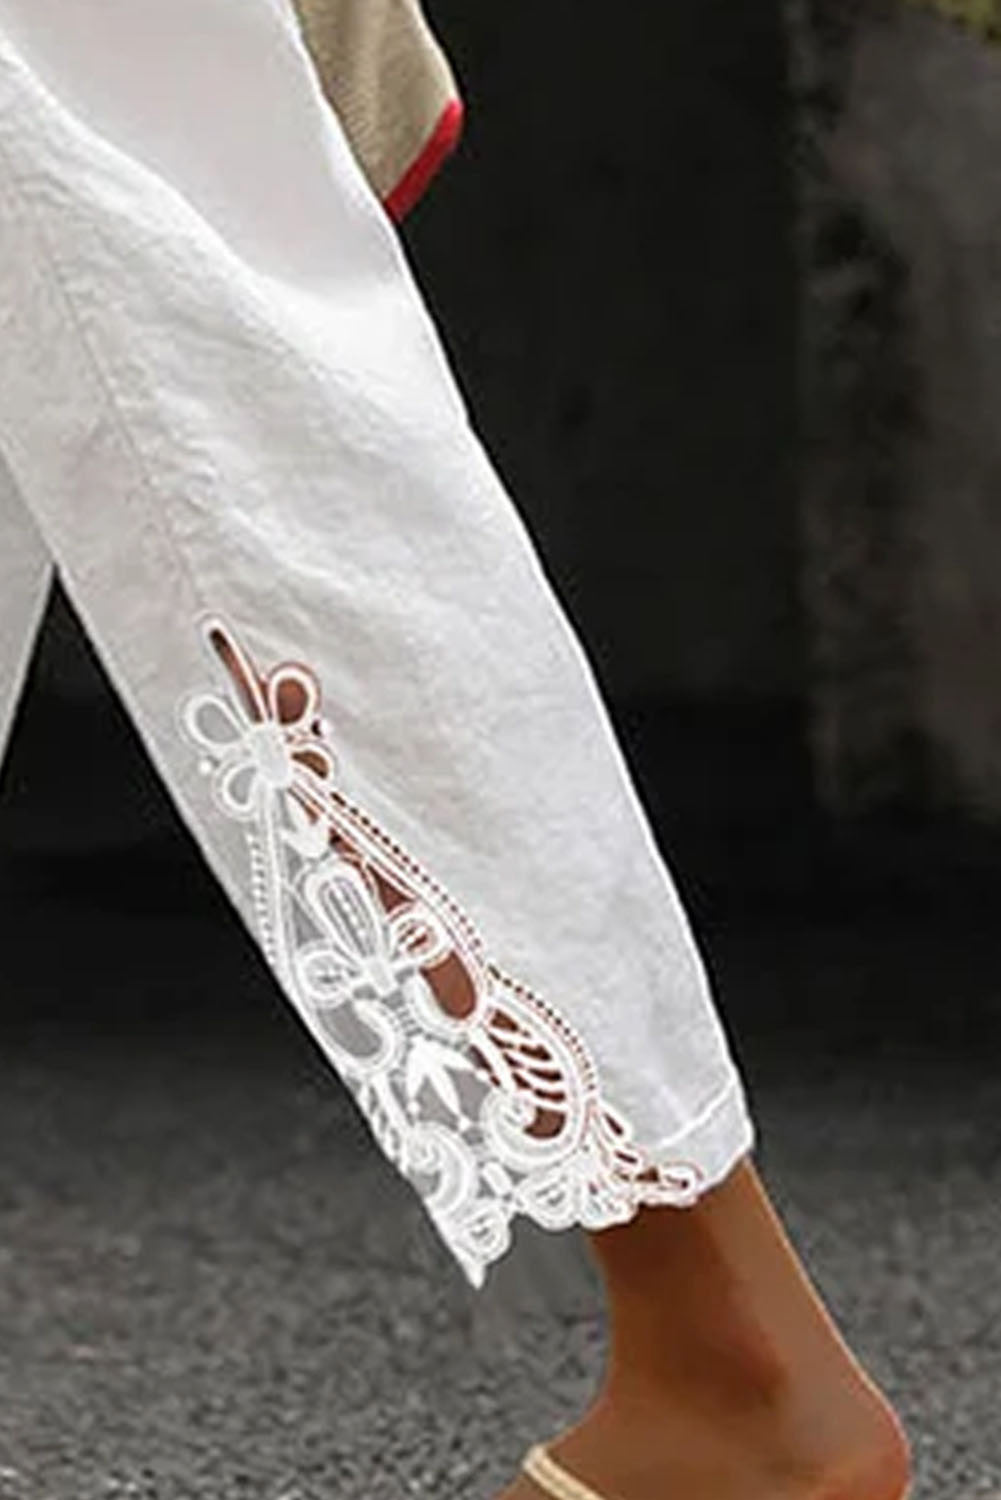 Khaki Drawstring Linen Pants